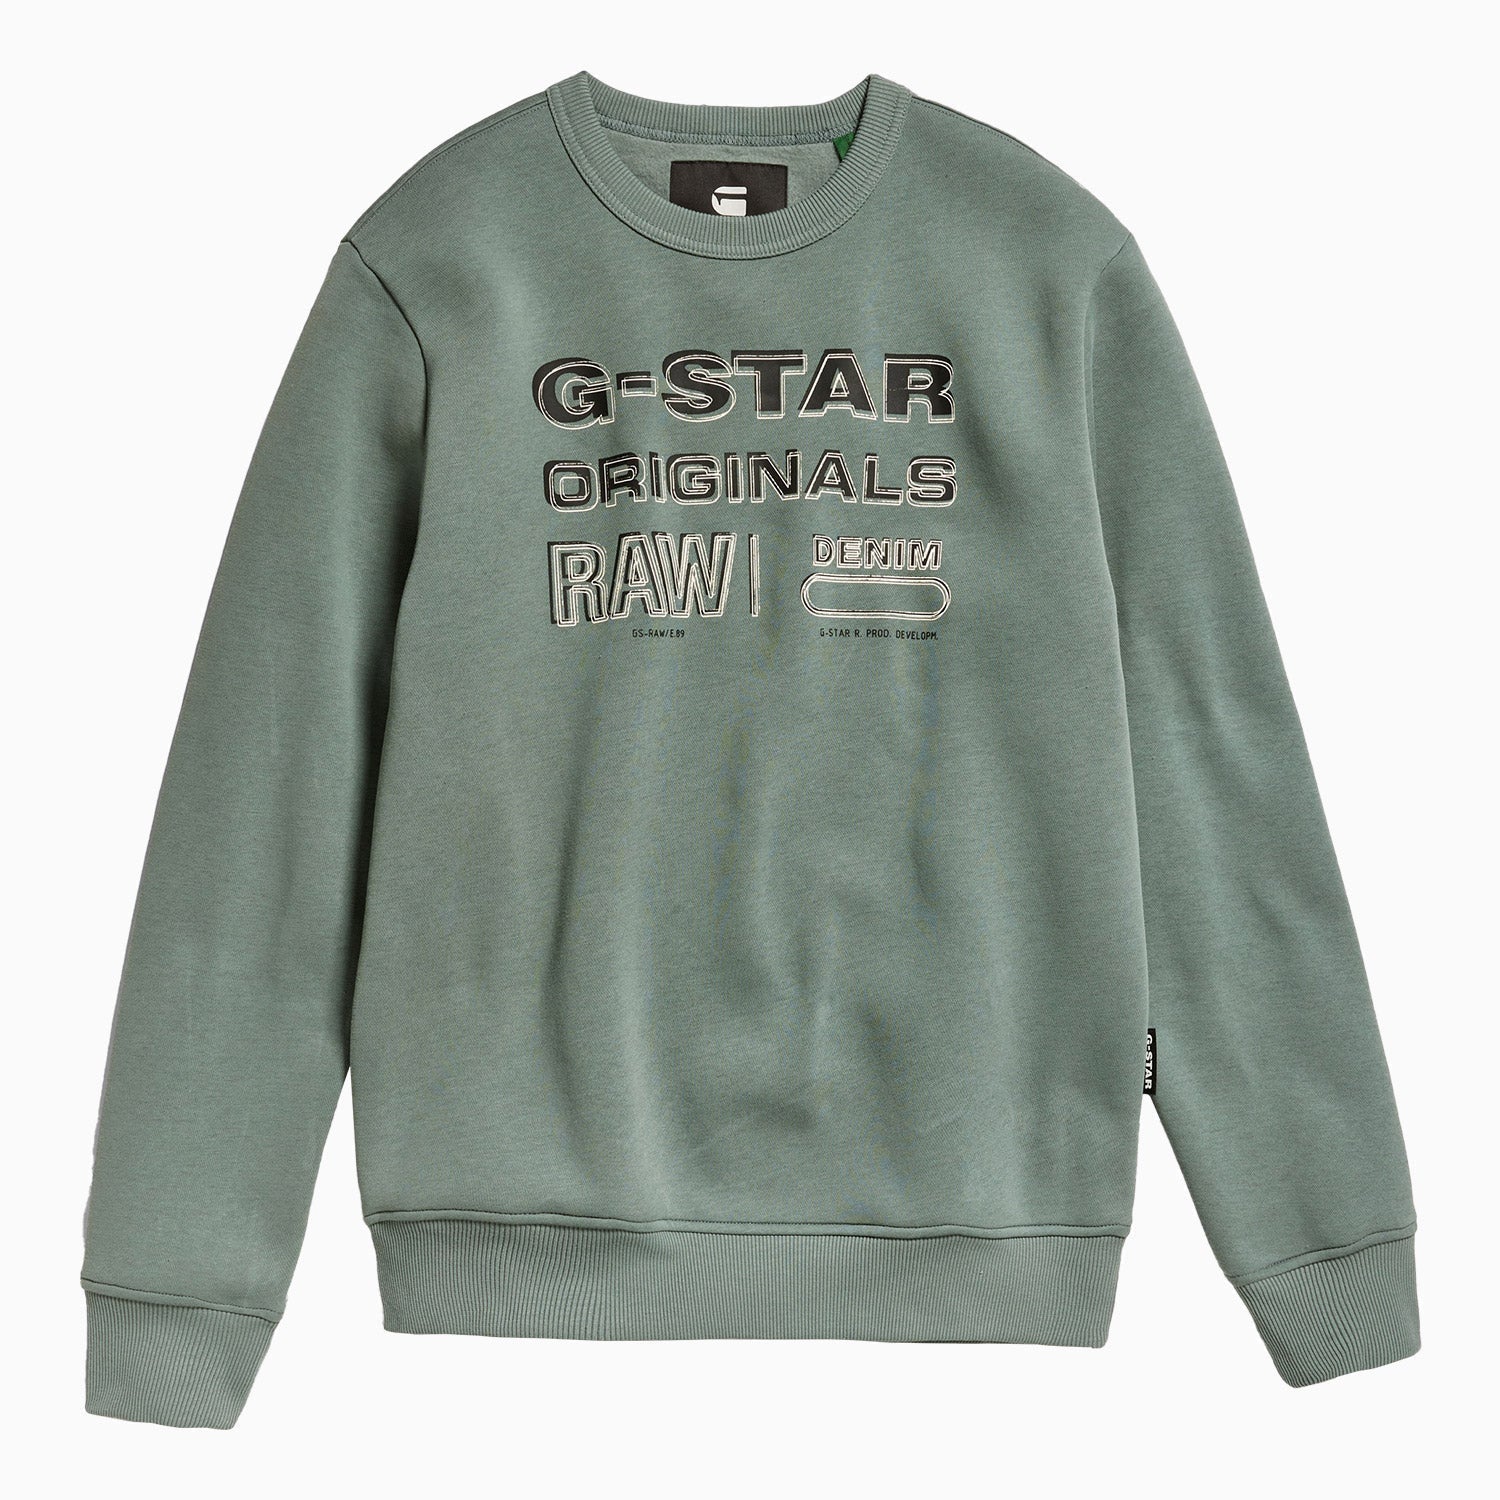 g-star-raw-mens-originals-stamp-r-crew-neck-sweatshirt-d22319-a971-4752